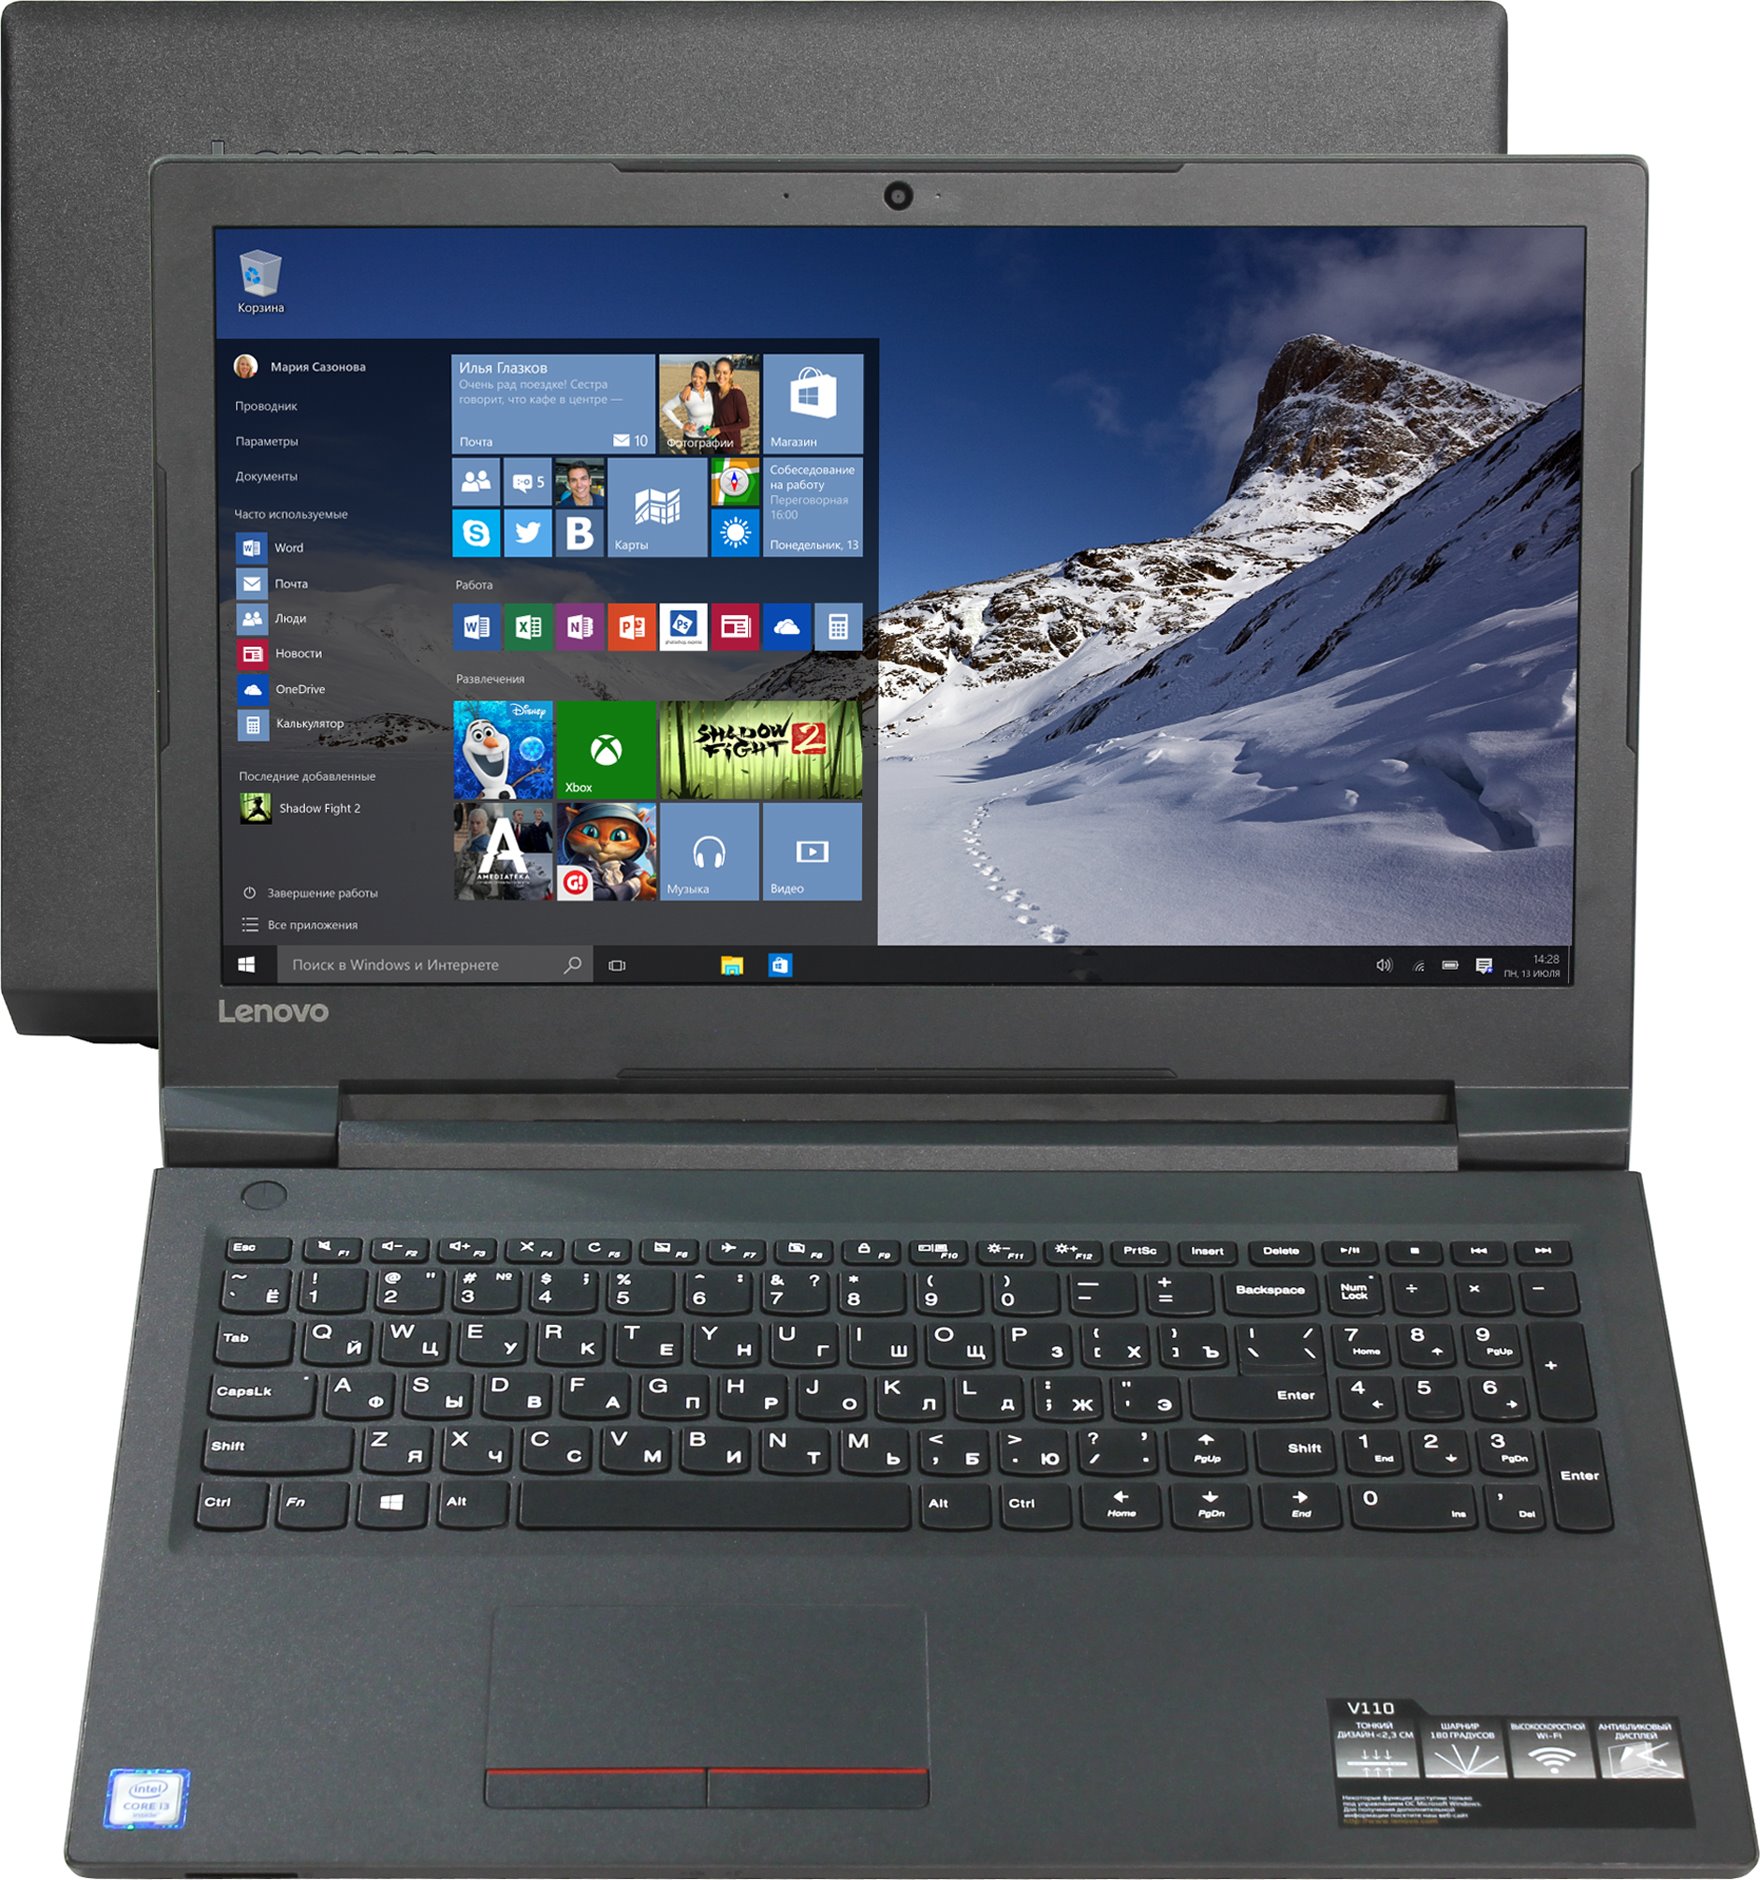 Ноутбук Lenovo V110-15, 15.6", Intel Celeron N3350, 1100 МГц, 2048 Мб, 500 Гб, Intel HD Graphics 500, Wi-Fi, Bluetooth, Cam, DOS, чёрный